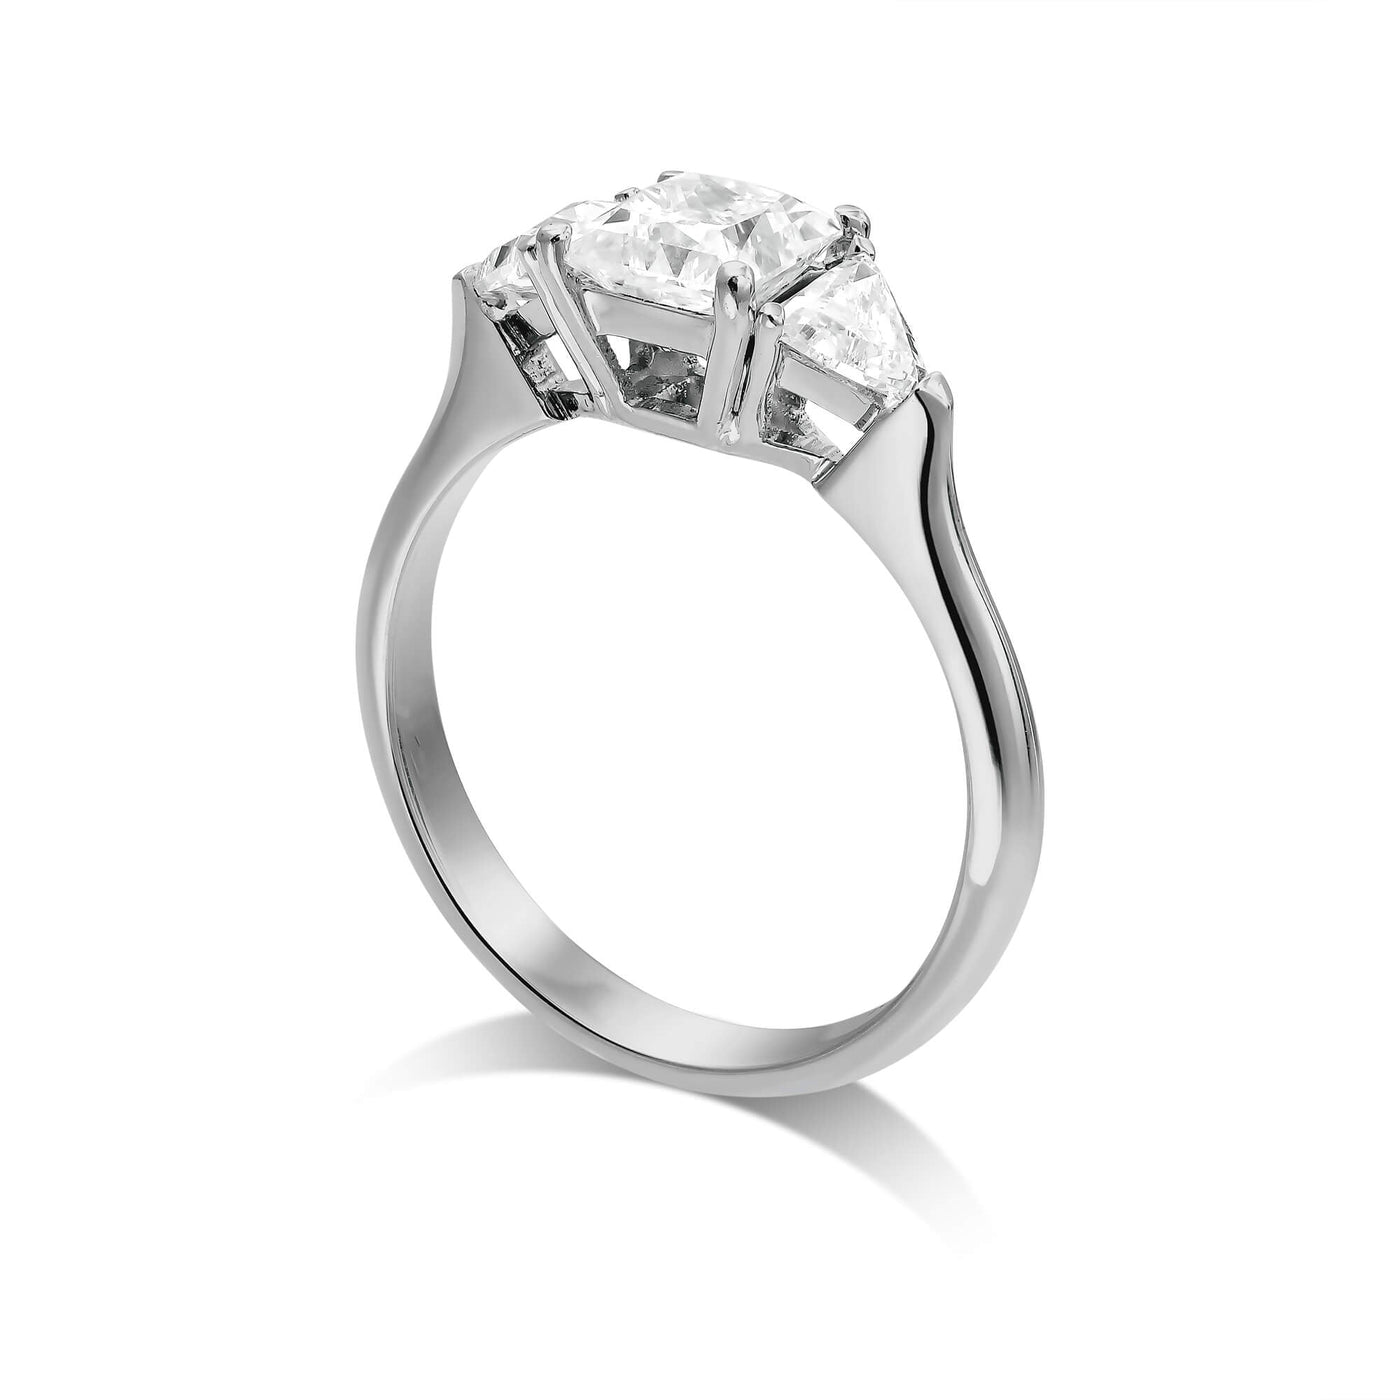 Christina Princess 3-Stone Engagement Ring